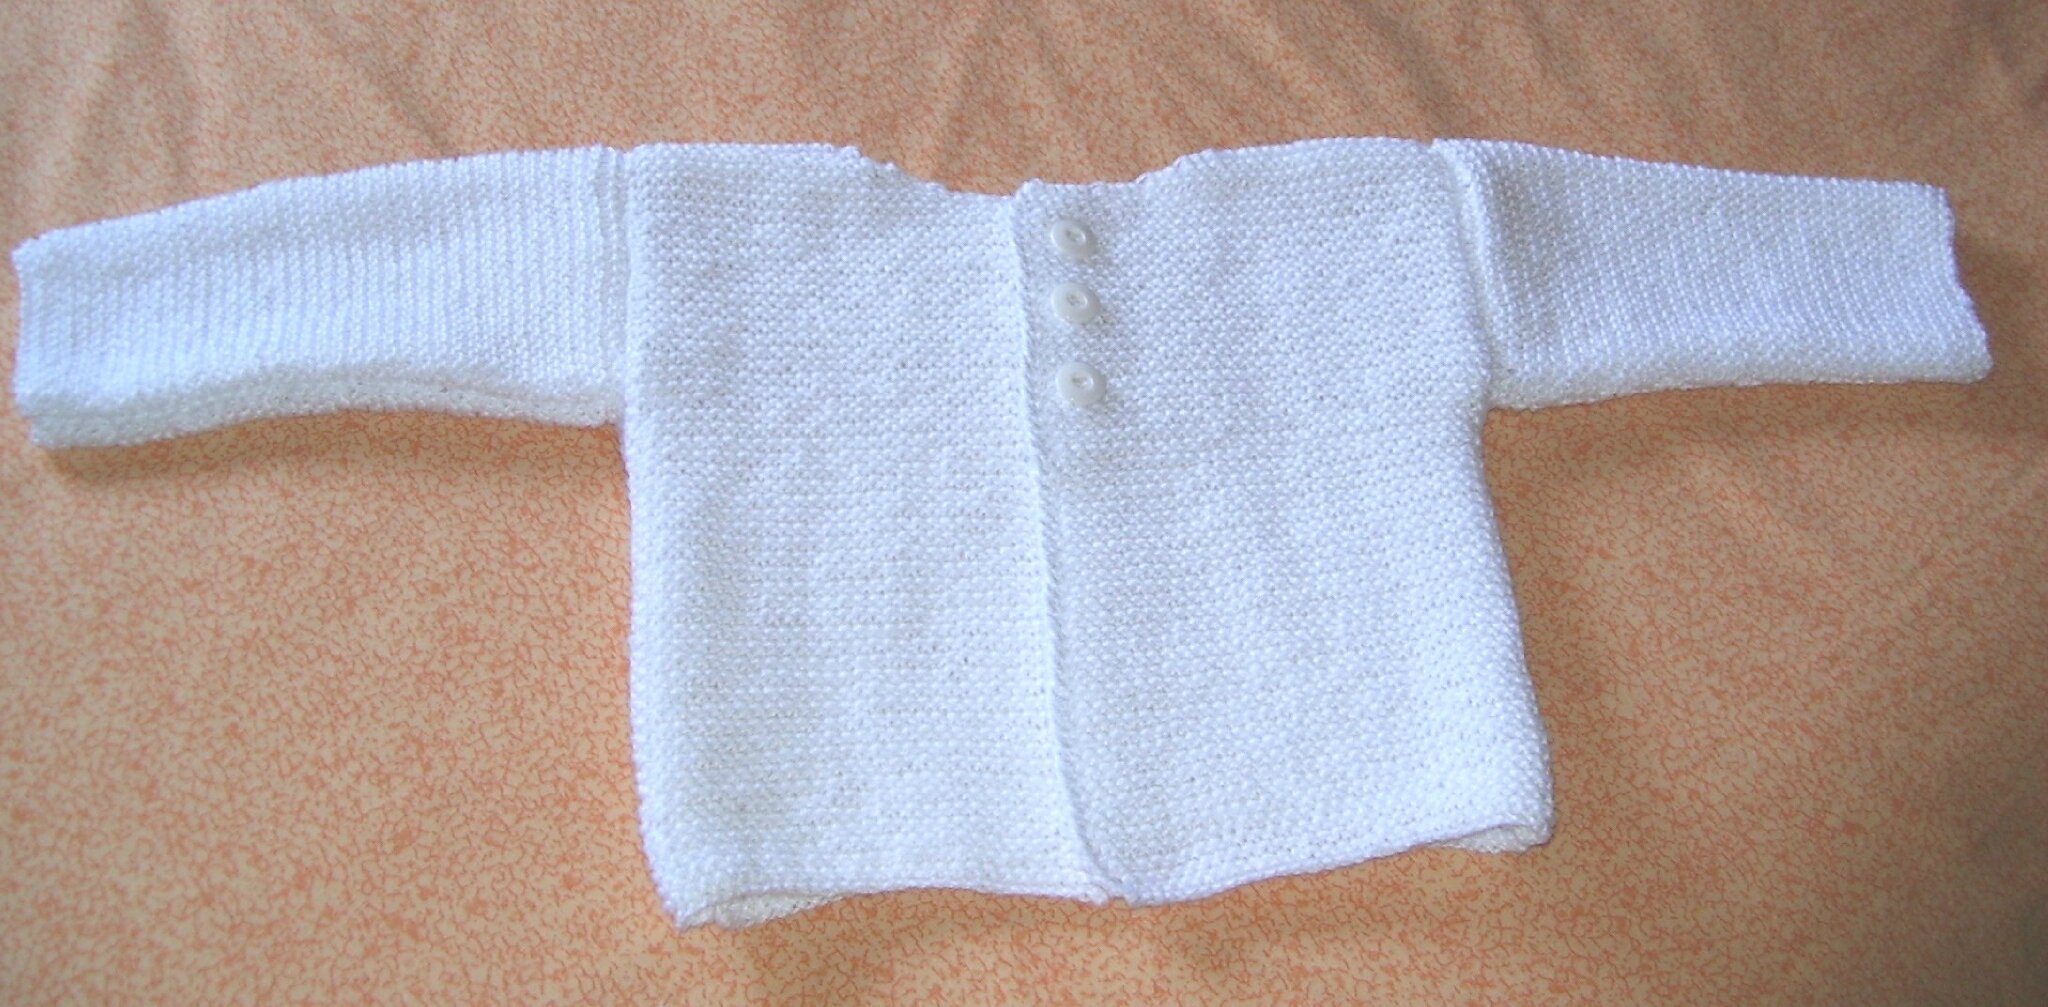 tricoter une brassiere 1er age